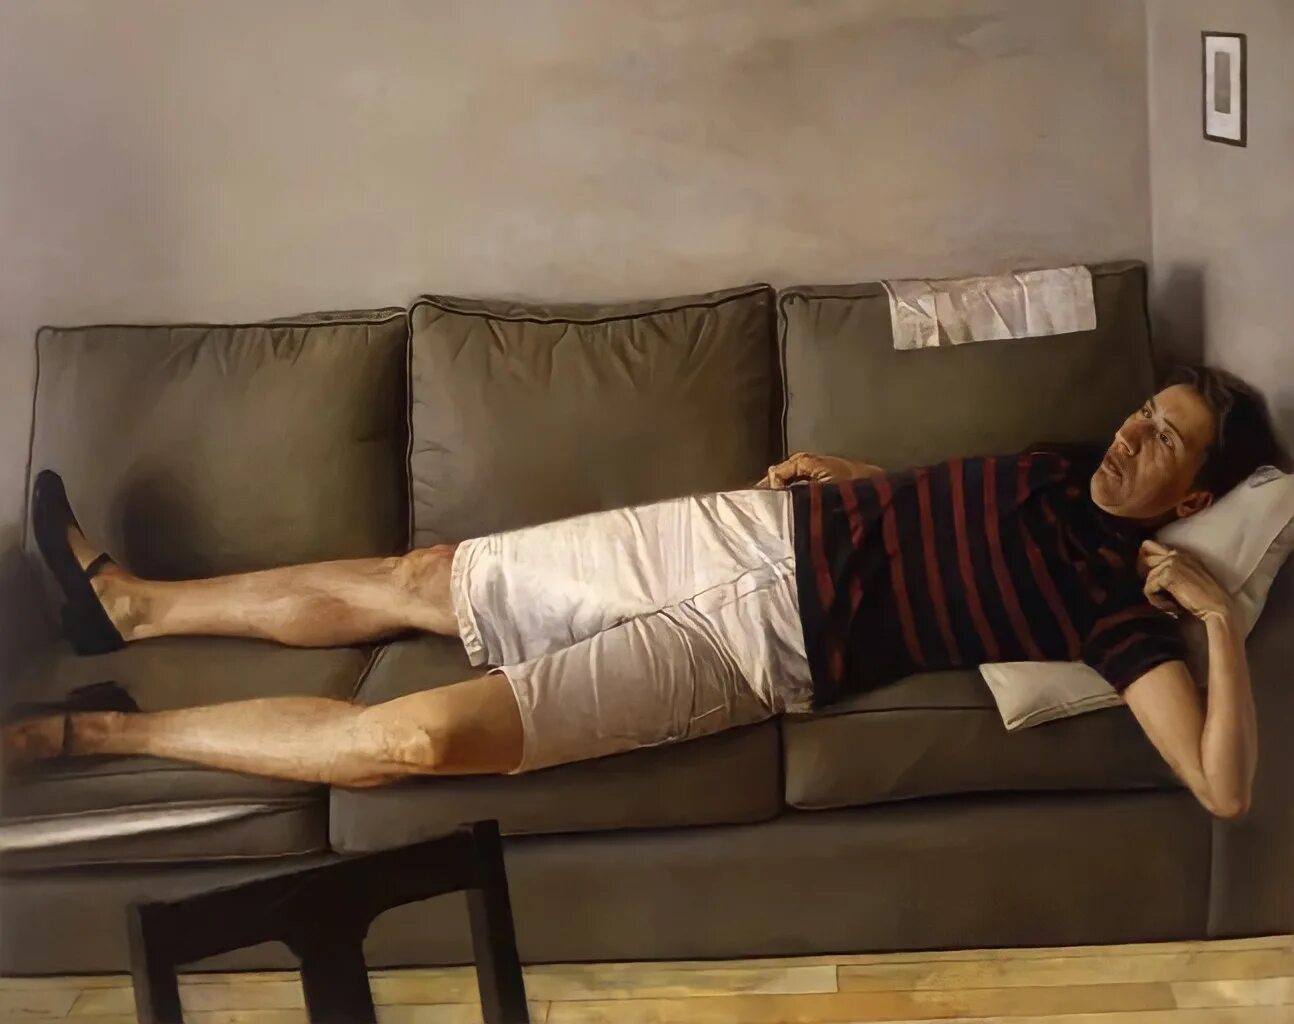 Paul Fenniak художник. Картины пола Кентона. Paul Weiner художник. Американский реализм мужчина на диване.